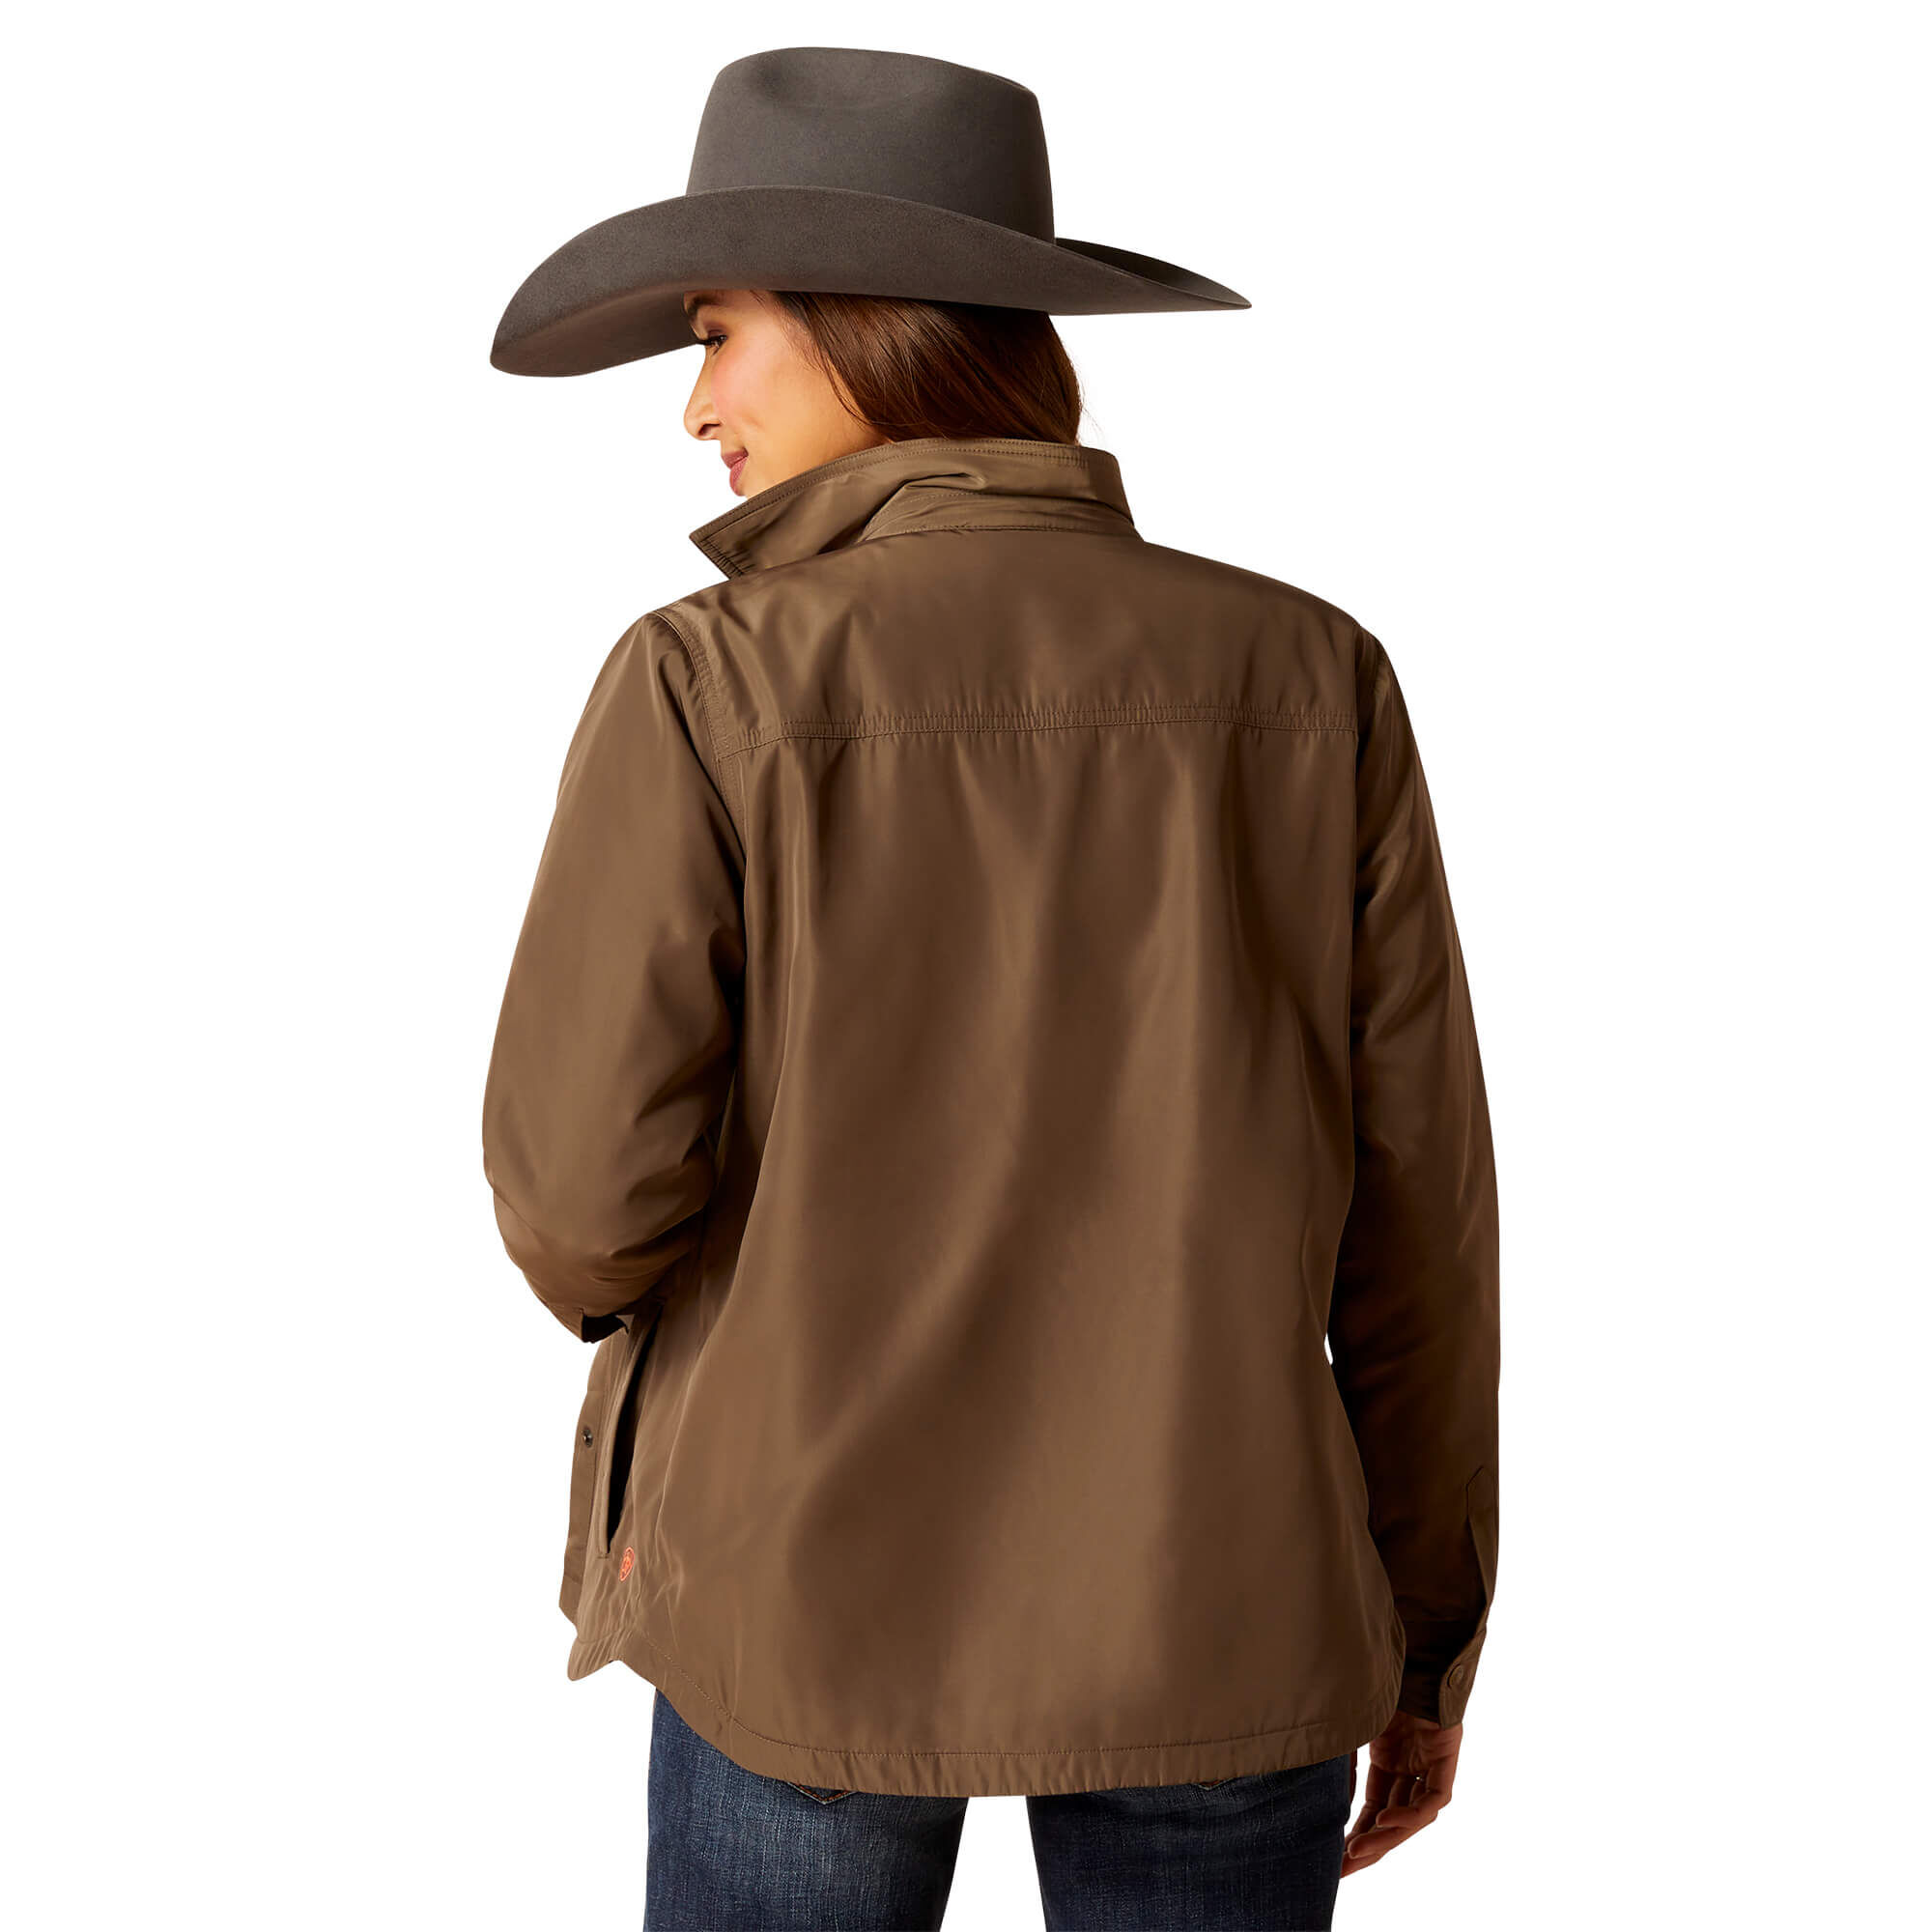 Women's Dilon Shirt Jacket in Canteen, Size: Medium by Ariat